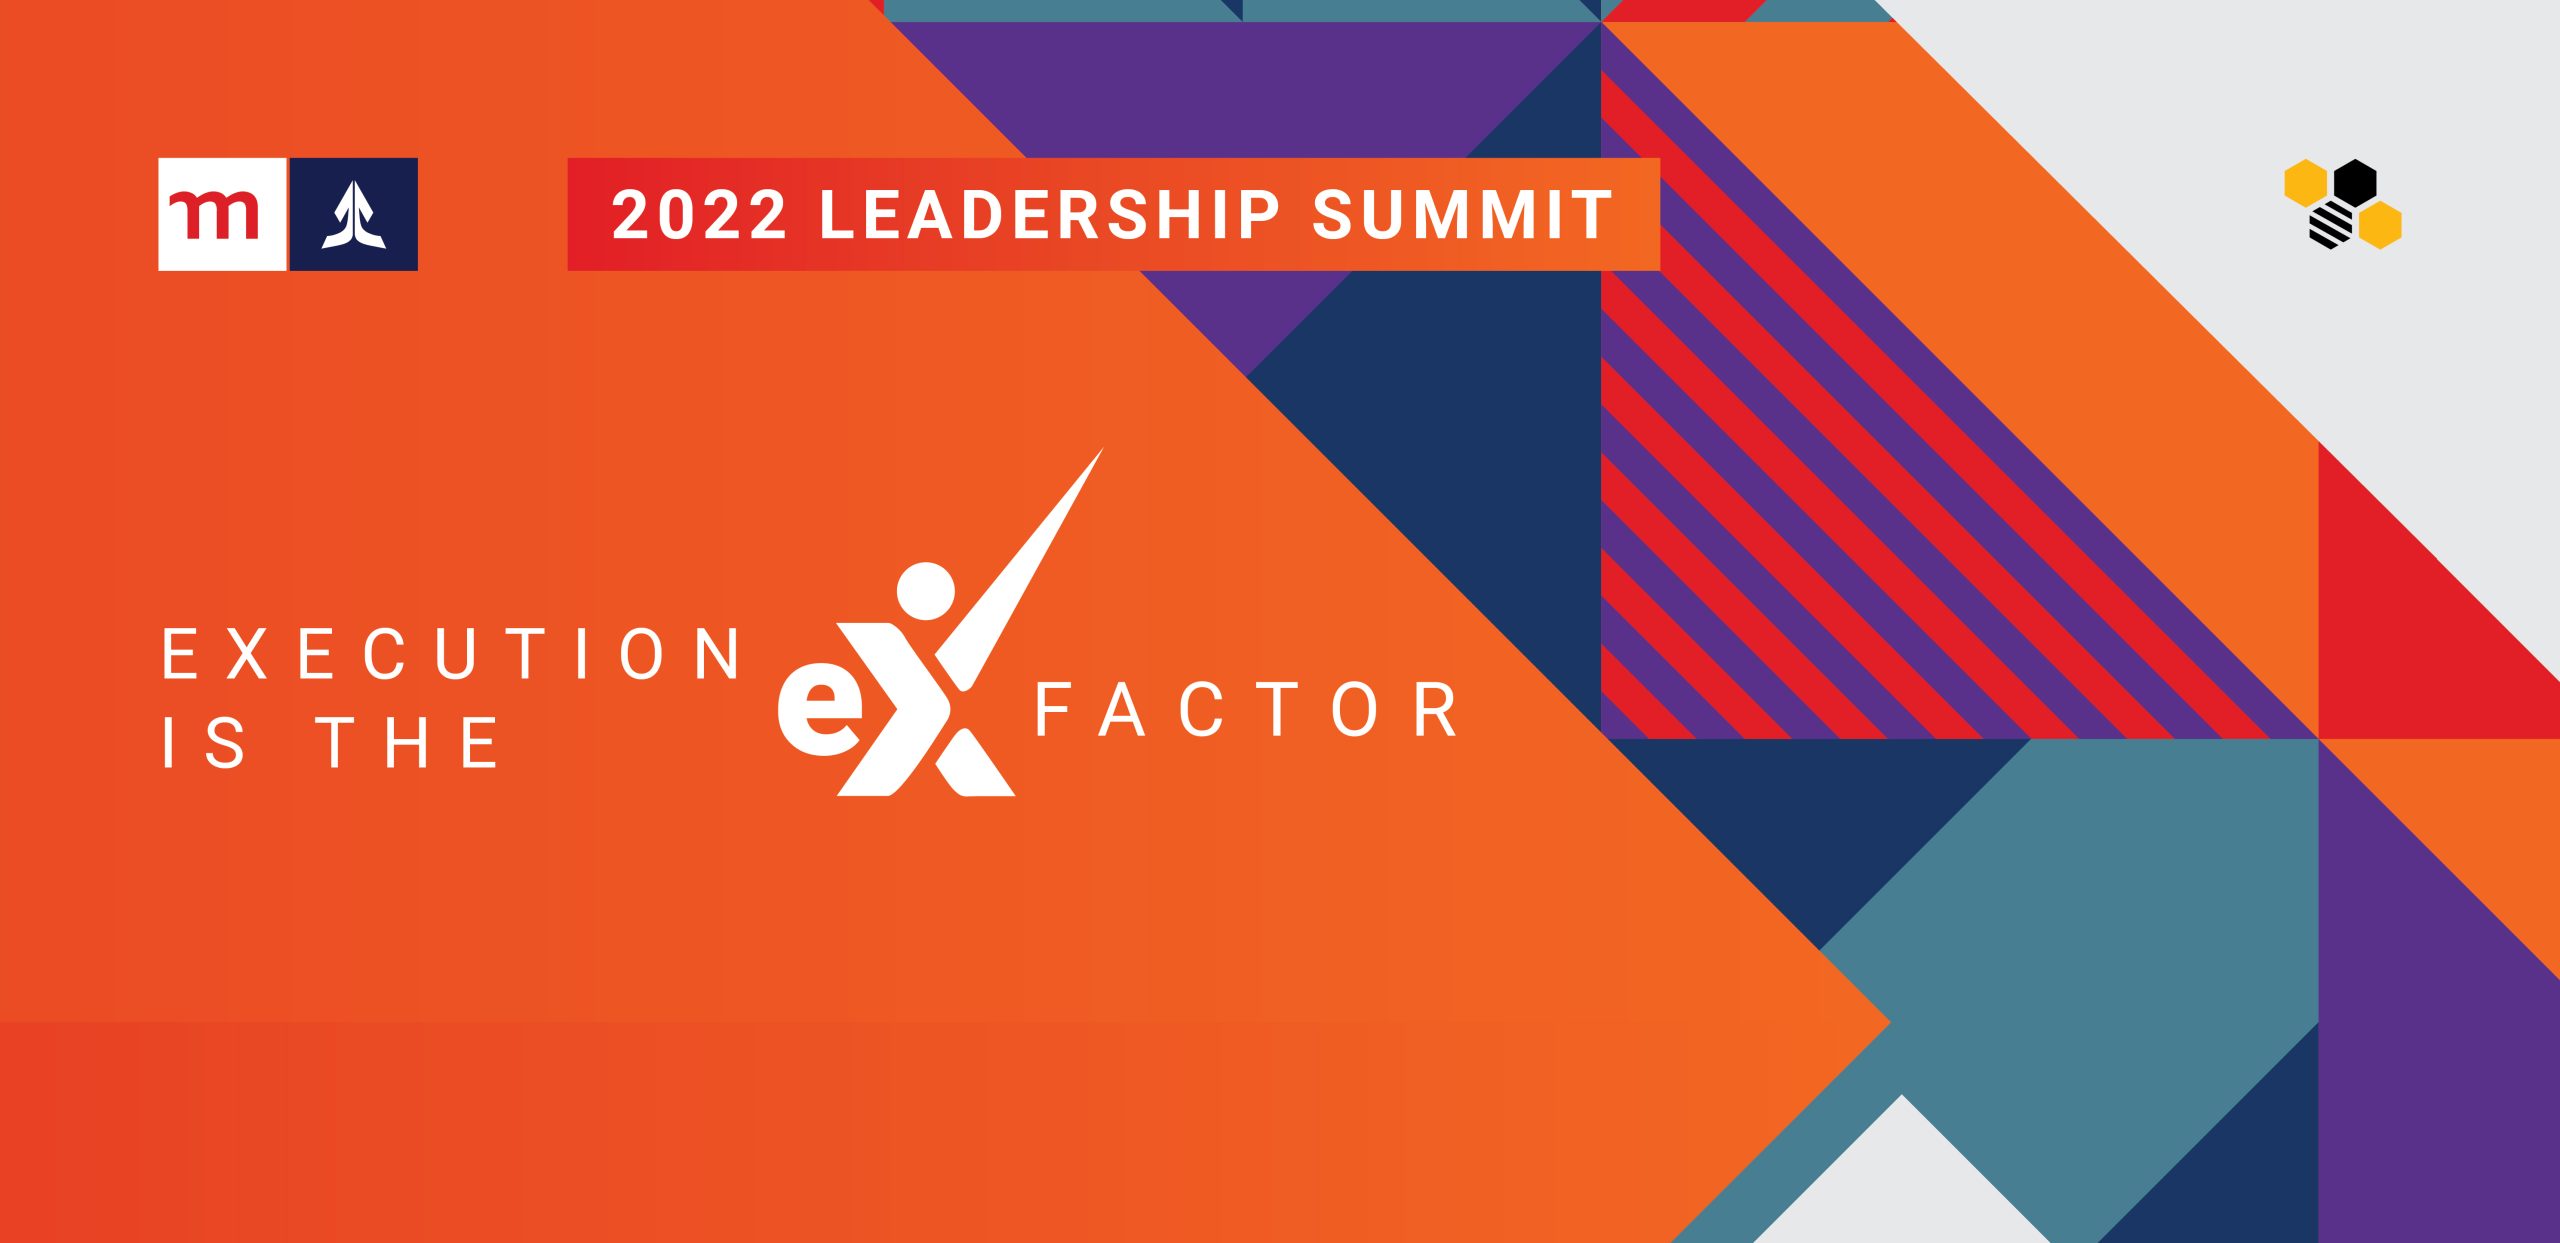 2022 Leadership Summit - CheckIn Desk